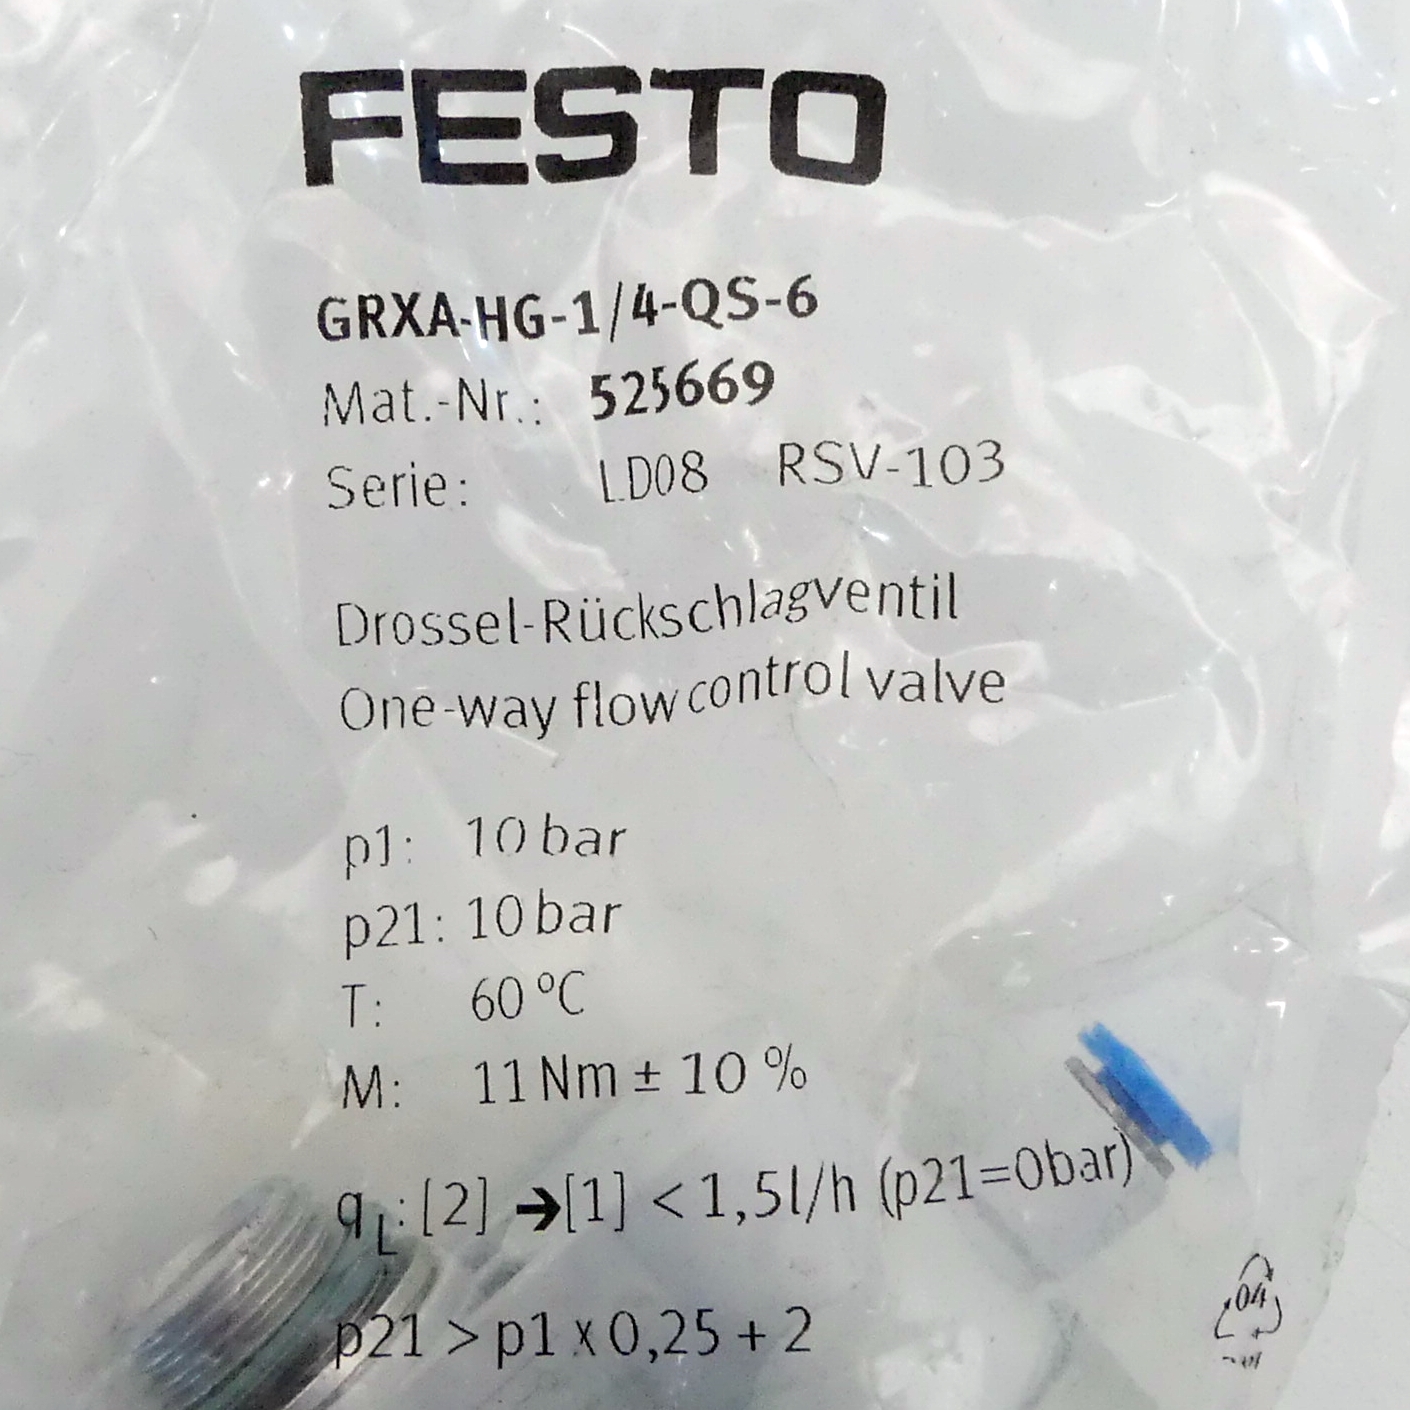 One-way flow control valve GRXA-HG-1/4-QS-6 